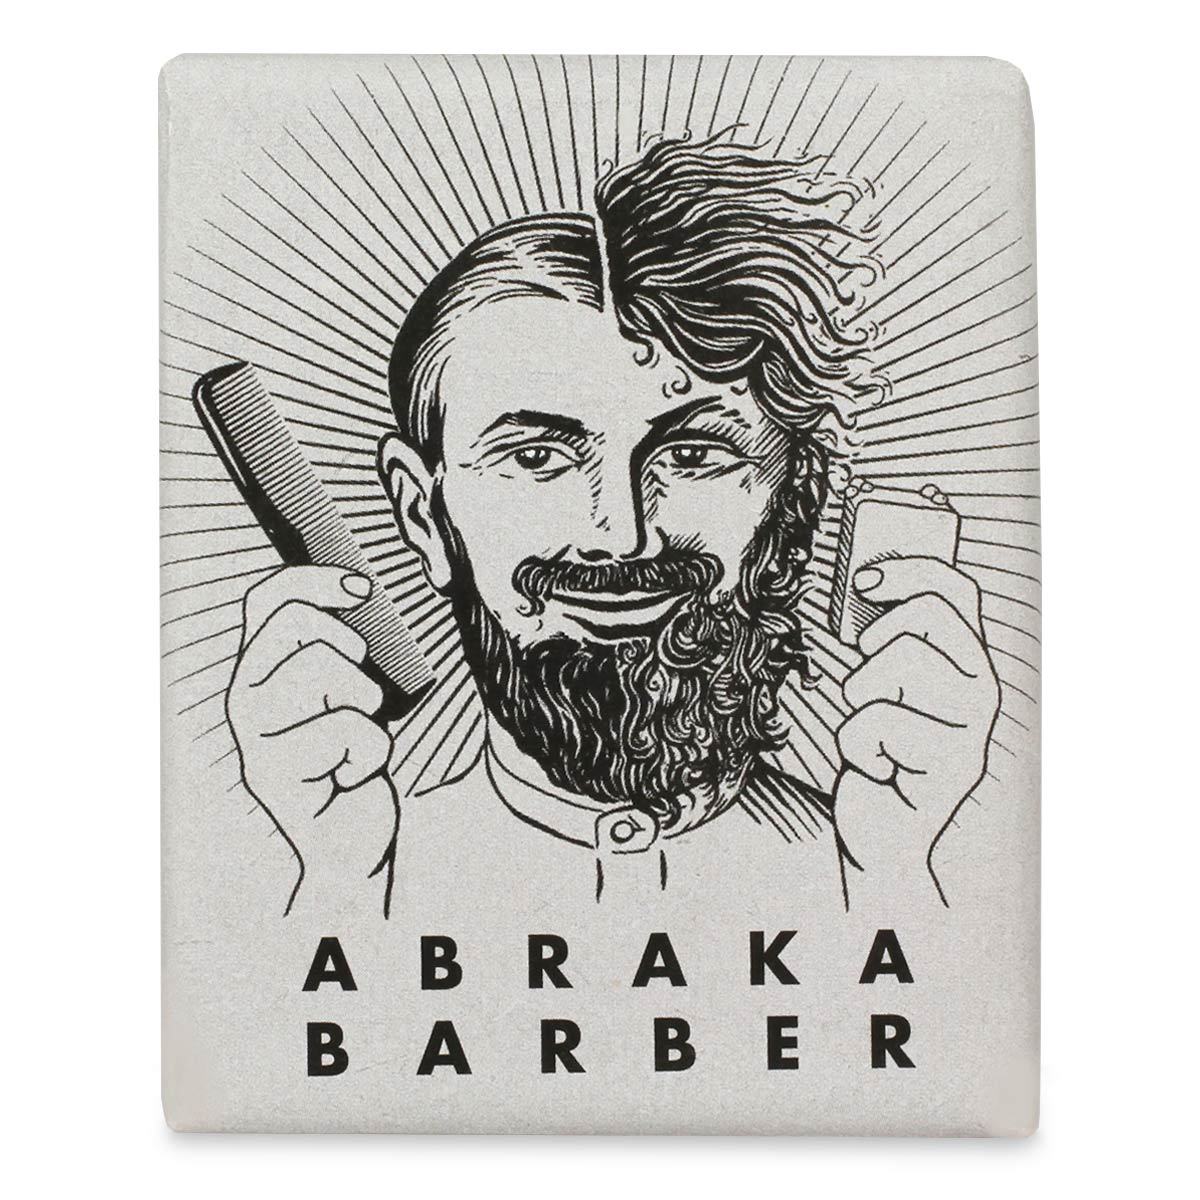 Primary image of Abraka Barber Beard Soap